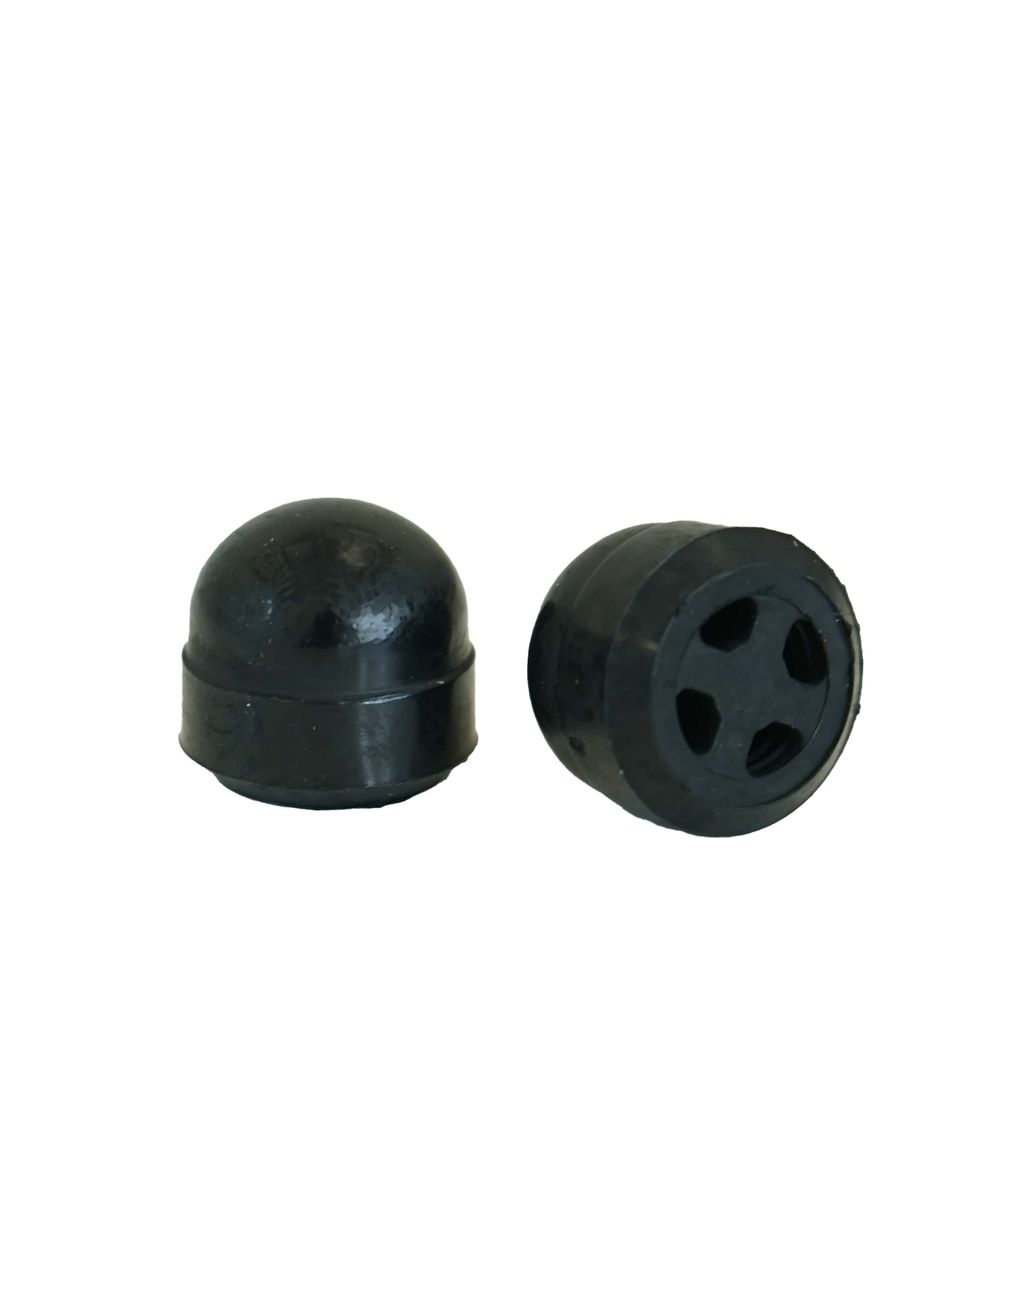 Gummidämpfer f. LPB-M/L;schwarz NW 20 mm (2 Stück = 1 Paar)